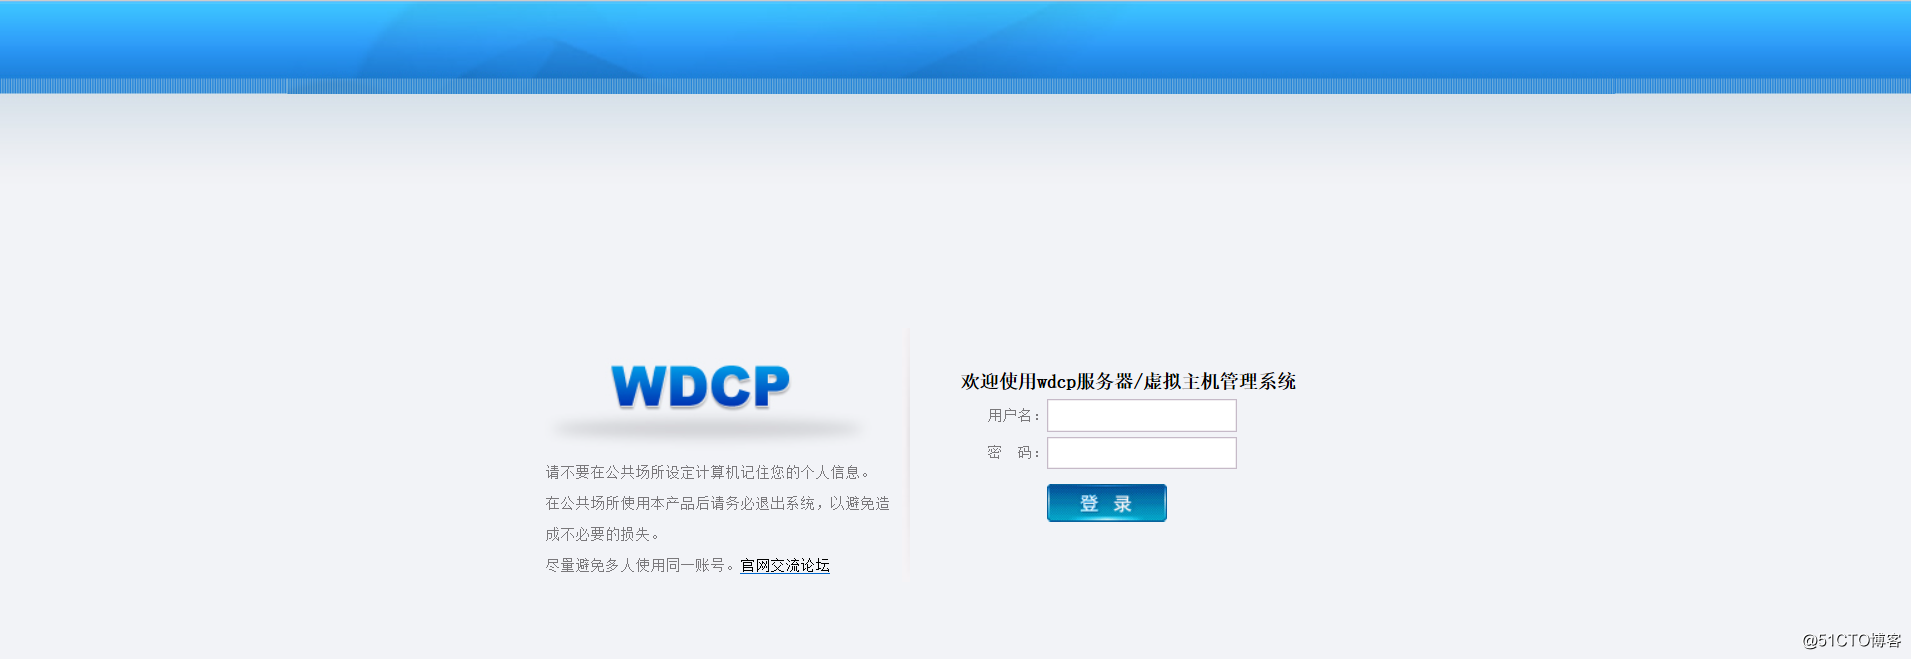 WDCP 打開web界面顯示一片空白